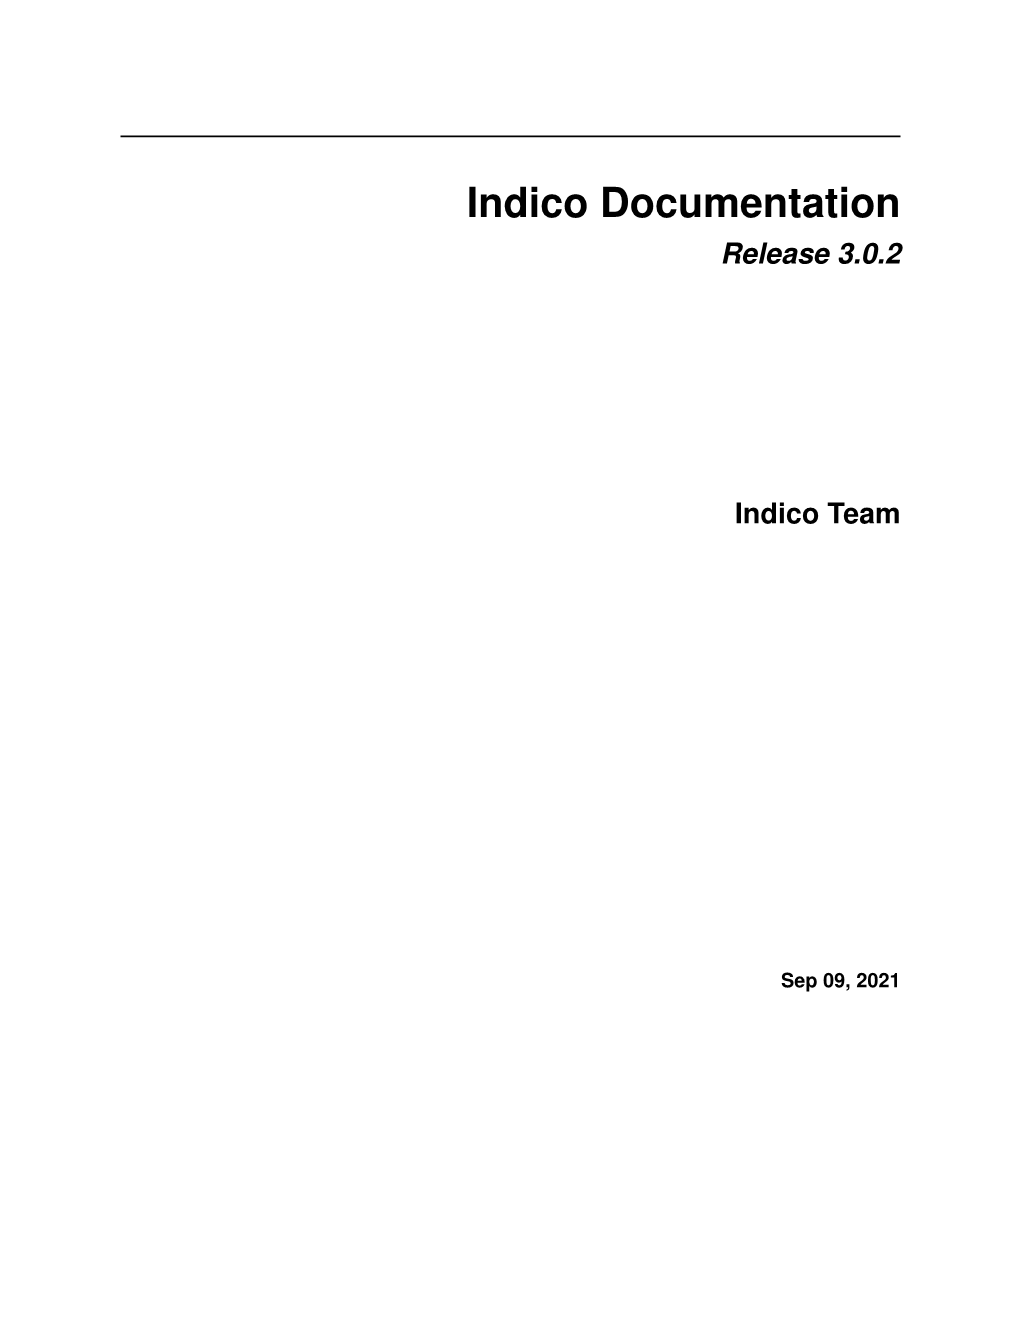 Indico Documentation Release 3.0.2